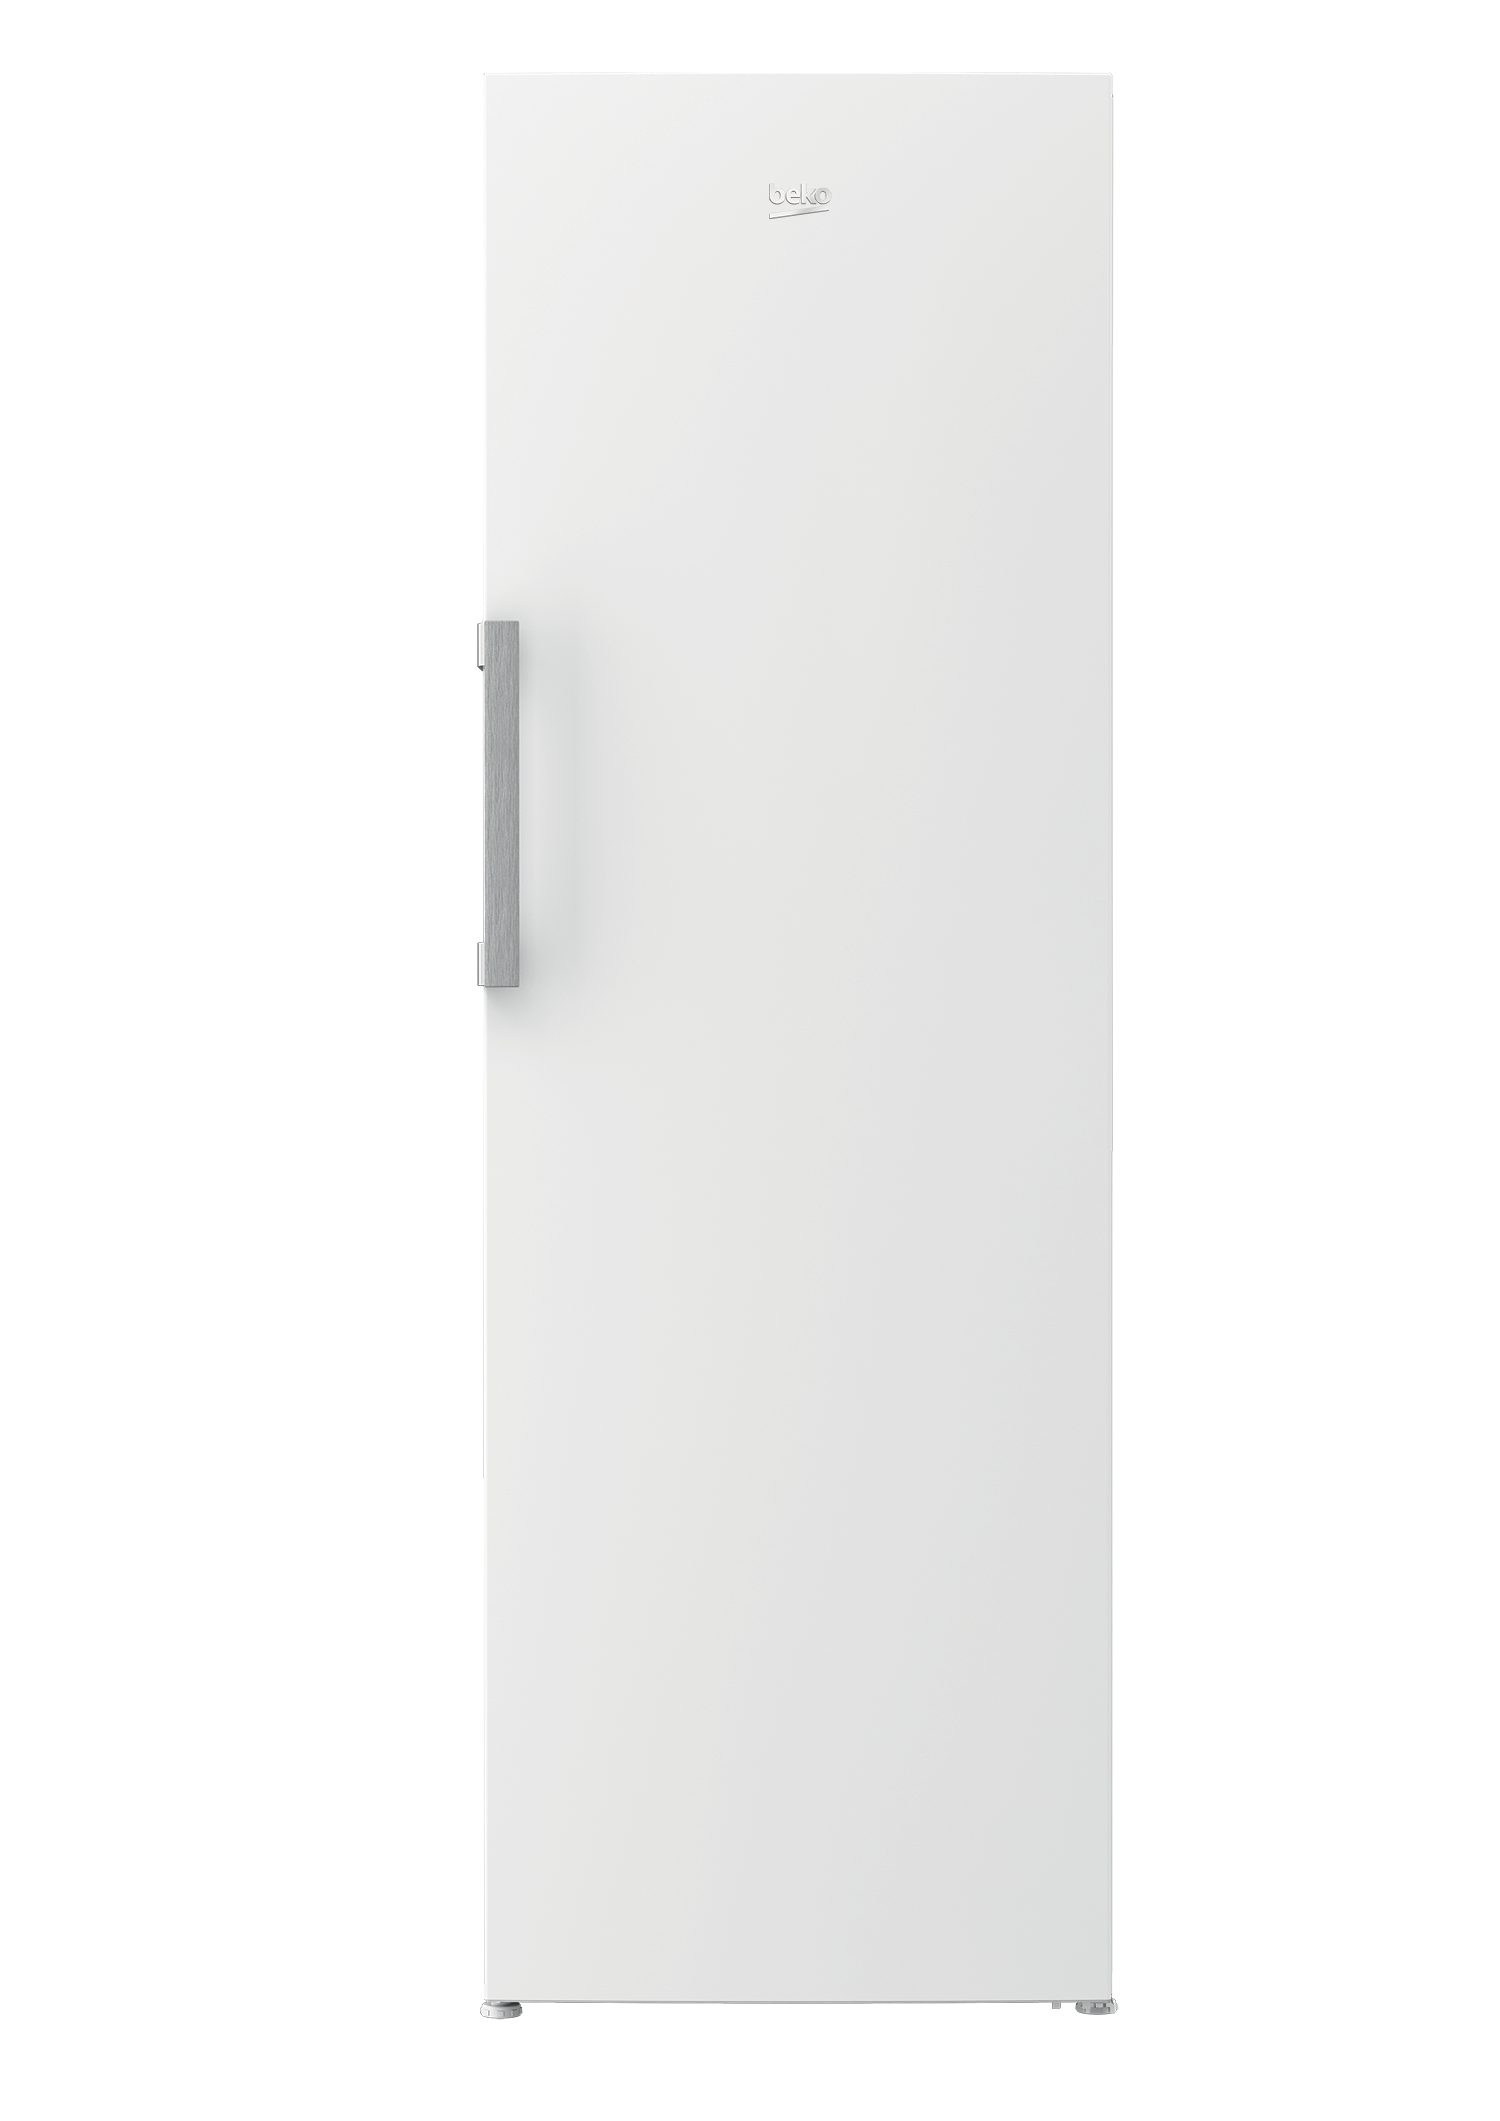 Beko Rsne445i31wn Una puerta blanco cooler no frost frigorifico 1 a++ 185x60cm independiente 375 185cm 41